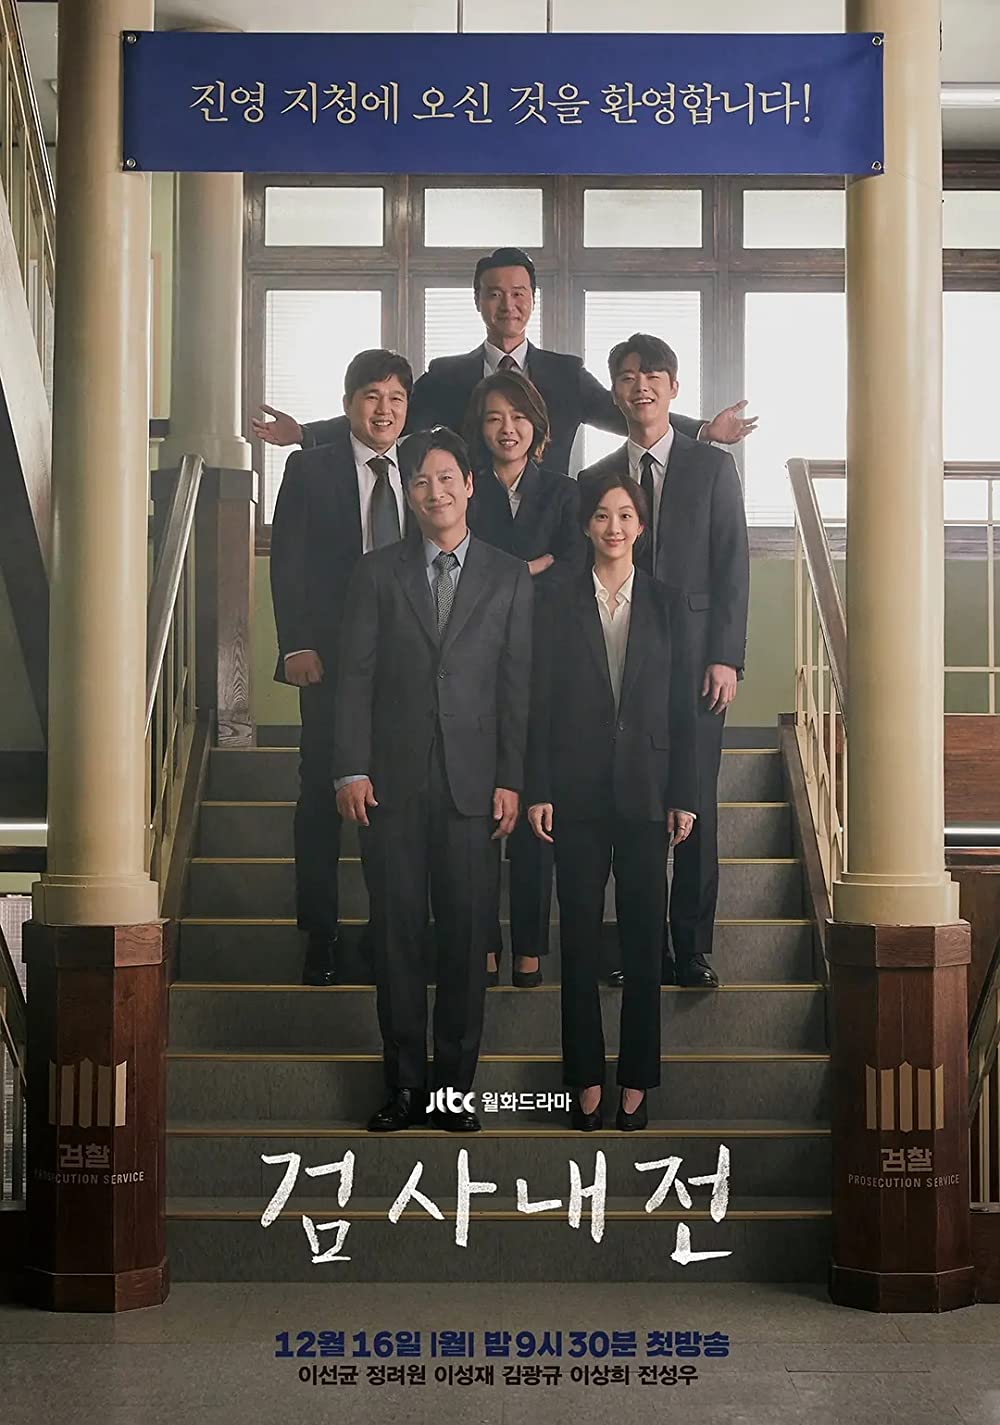 11 Rekomendasi drama Korea di Disney+ Hotstar, thriller hingga romansa